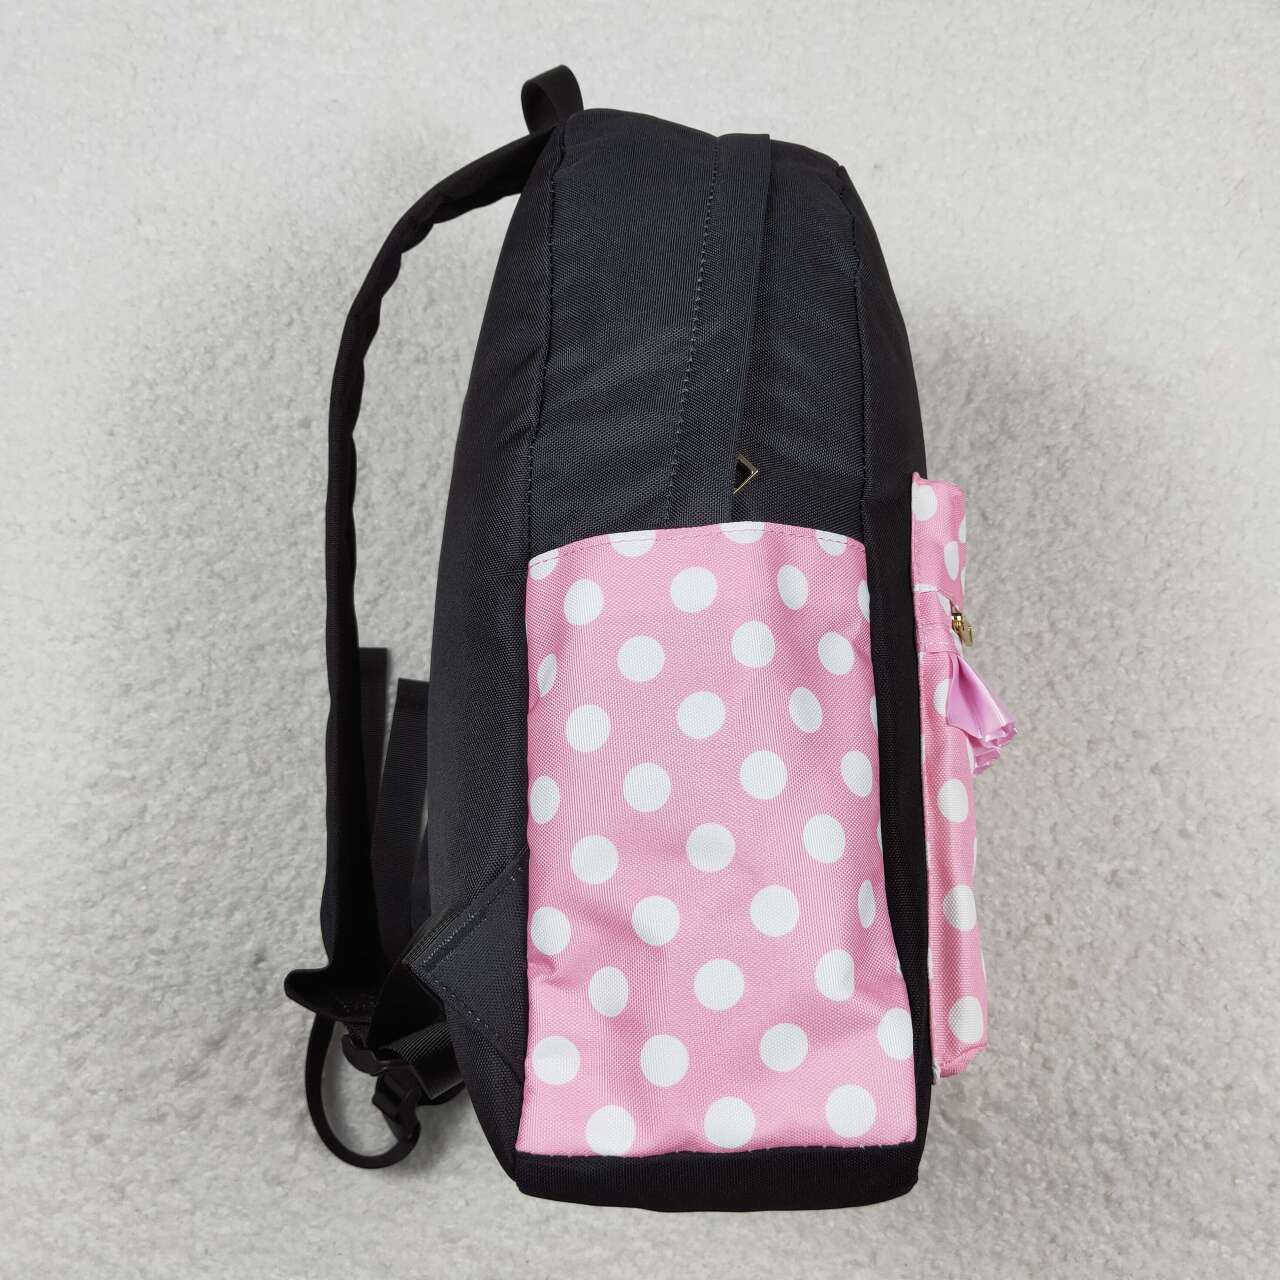 BA0183 Baby Girls Cute Cartoon Pink Polka Dot Packback School Bag